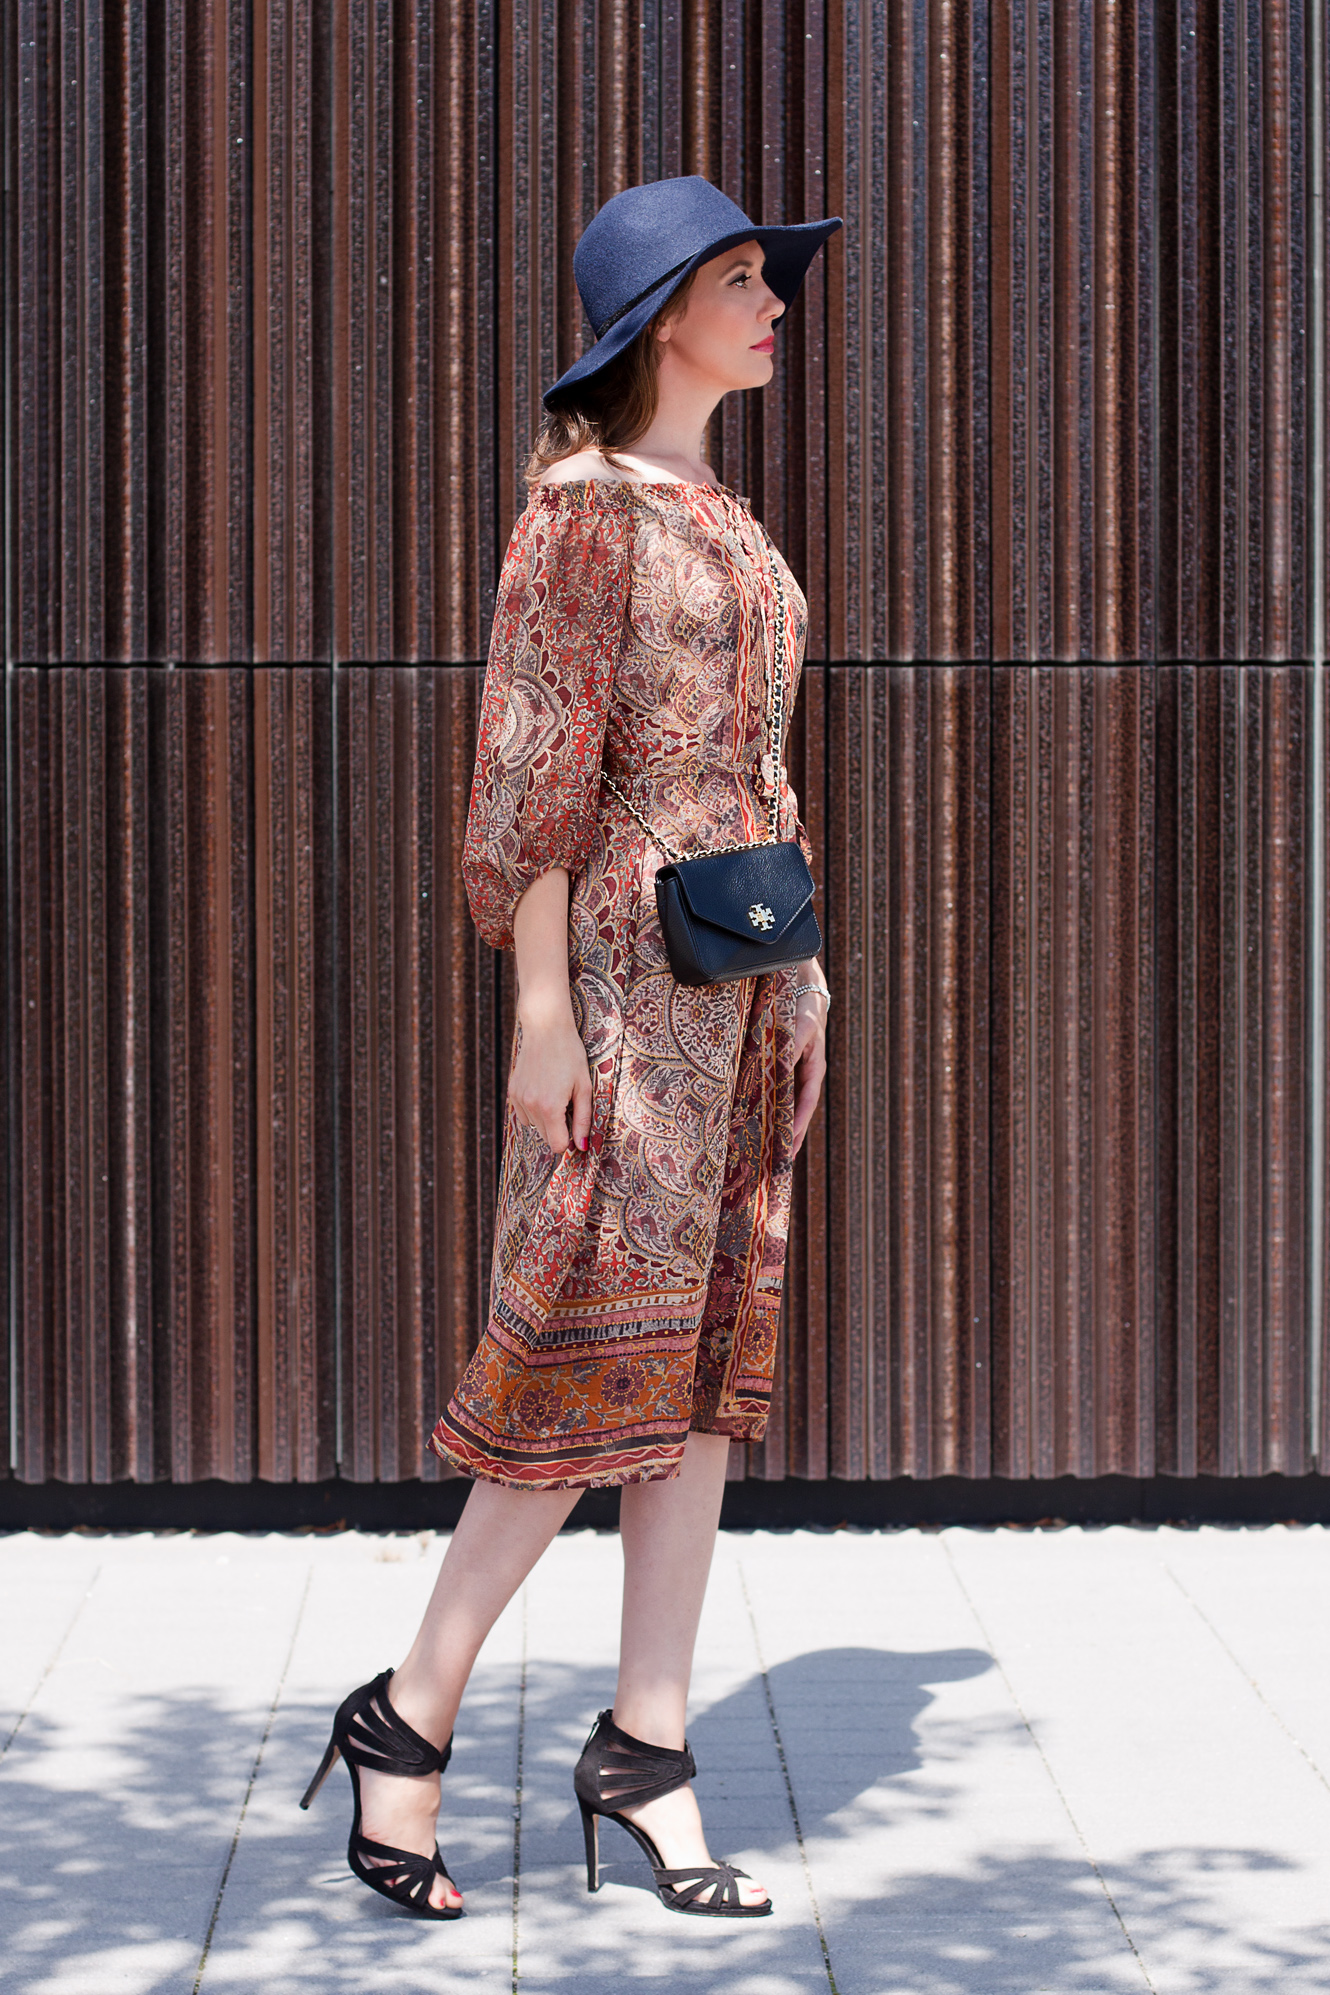 Zara_printed_dress_toryburch_boho_hat_fashionblog_5